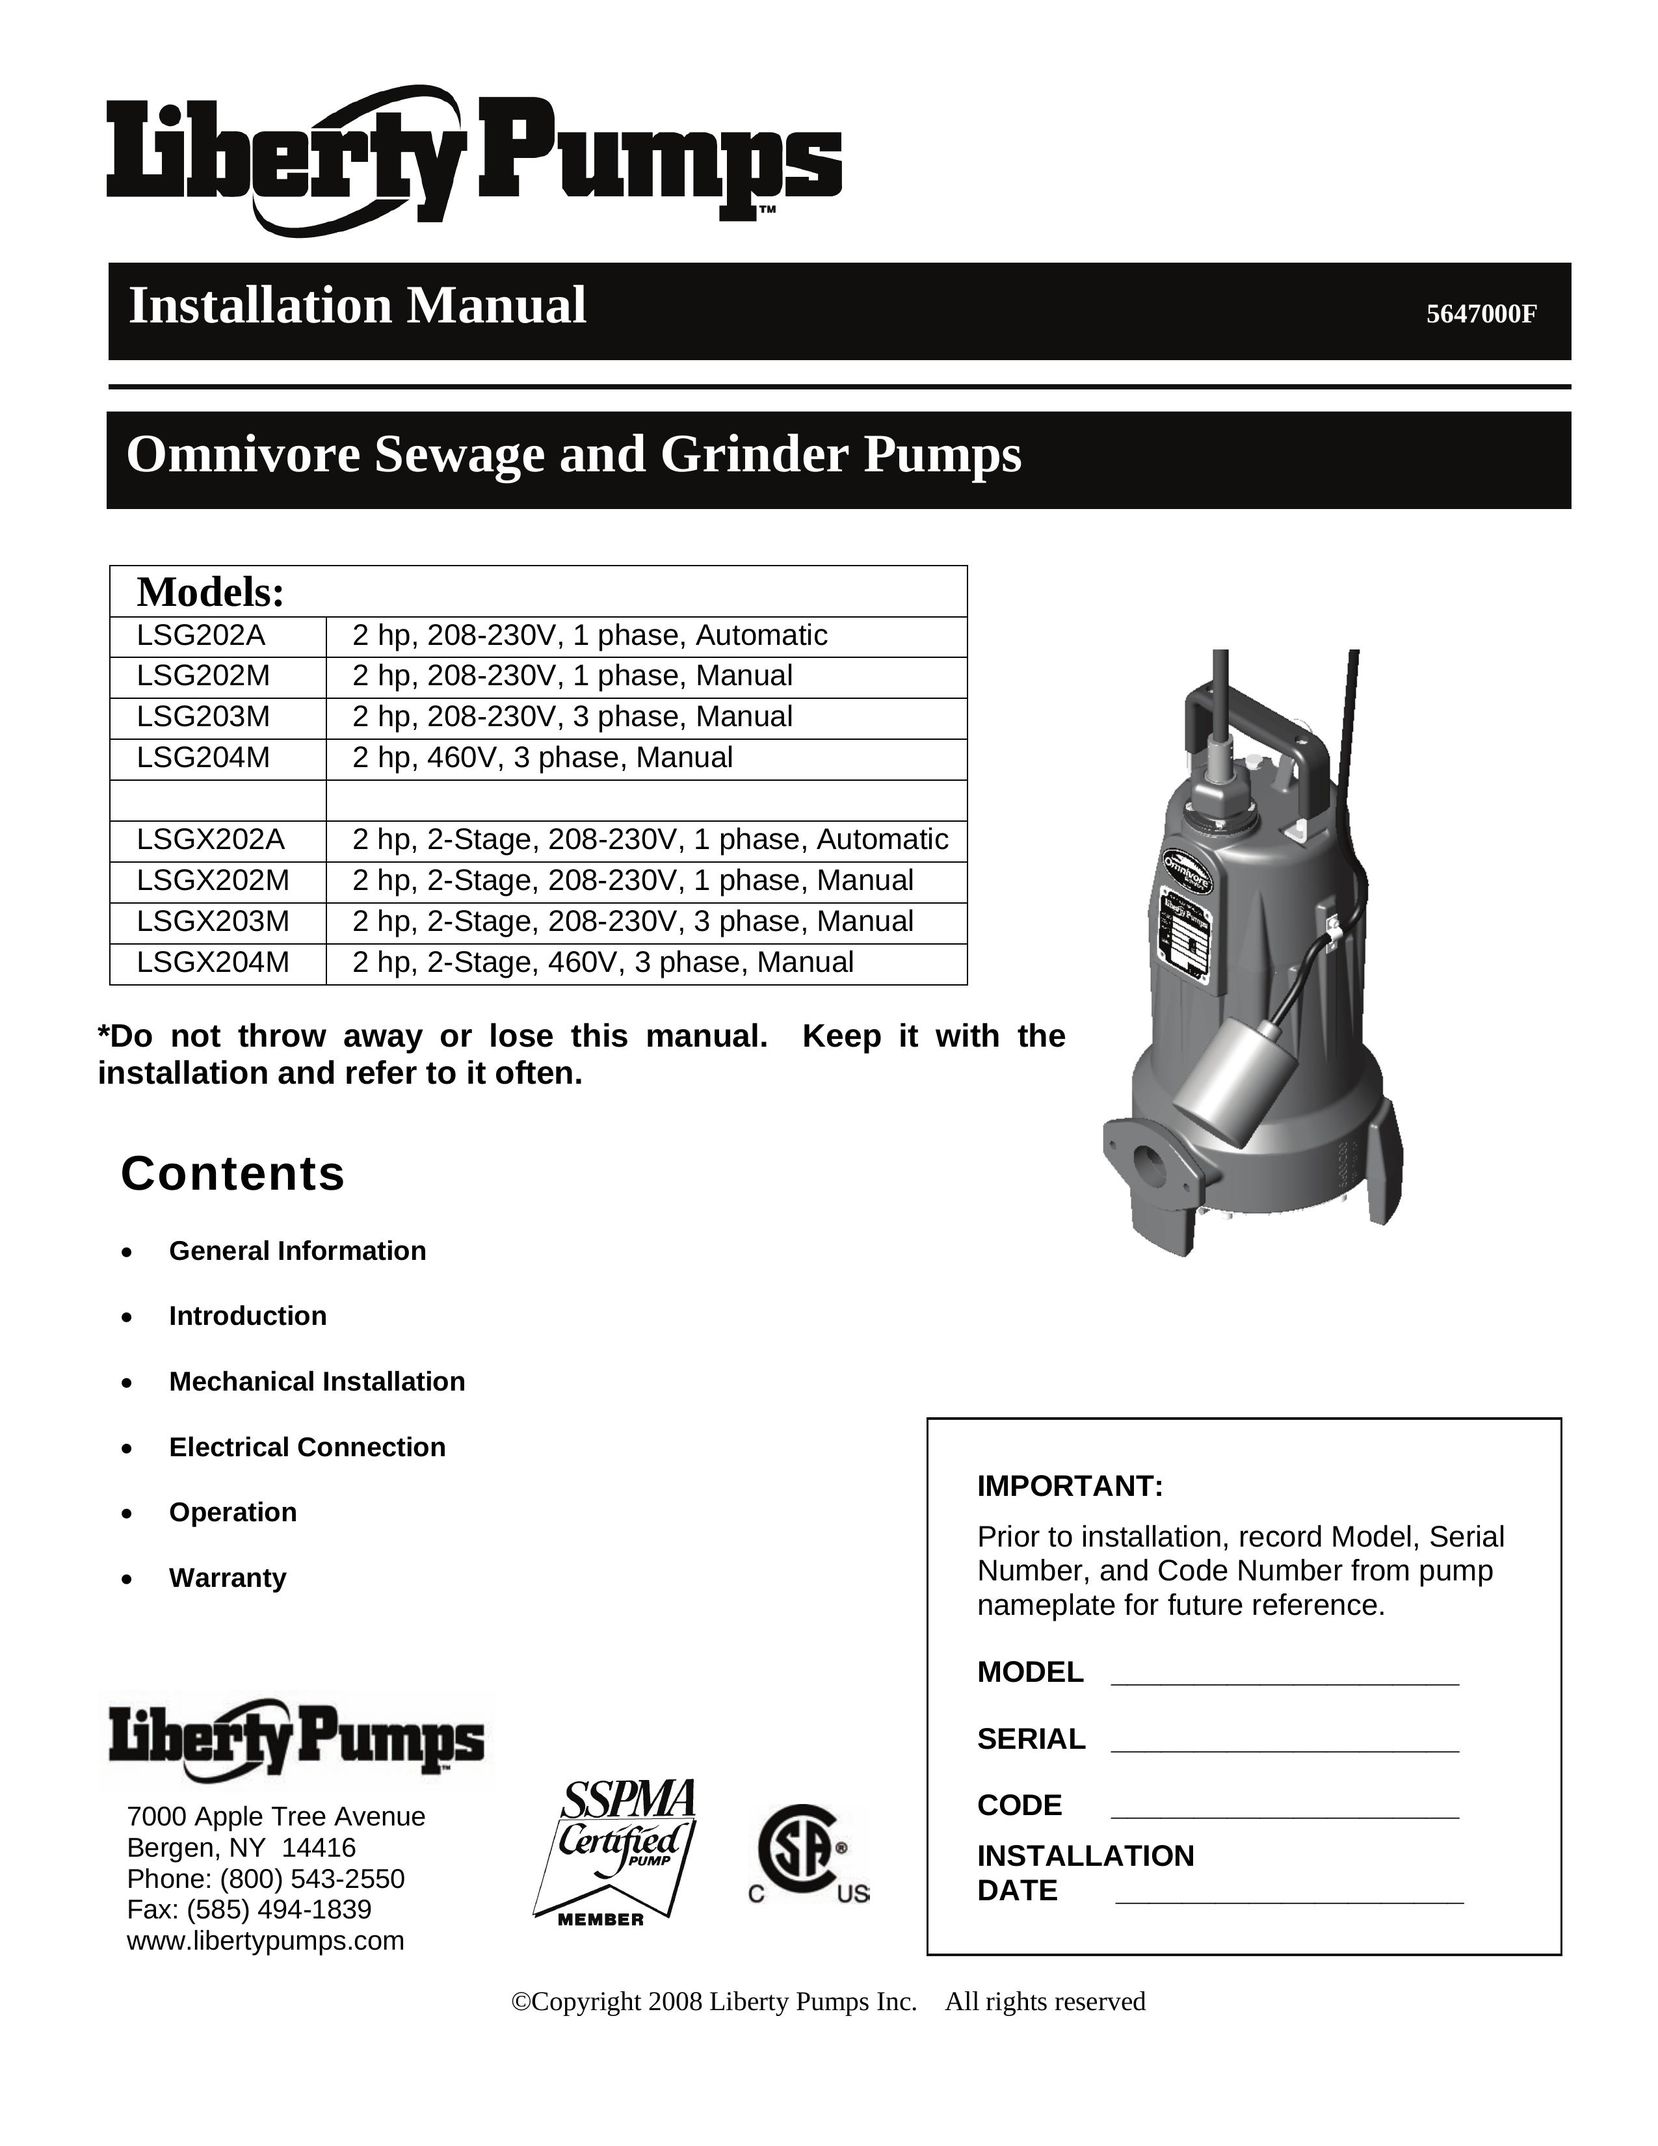 HP (Hewlett-Packard) LSGX203M Grinder User Manual